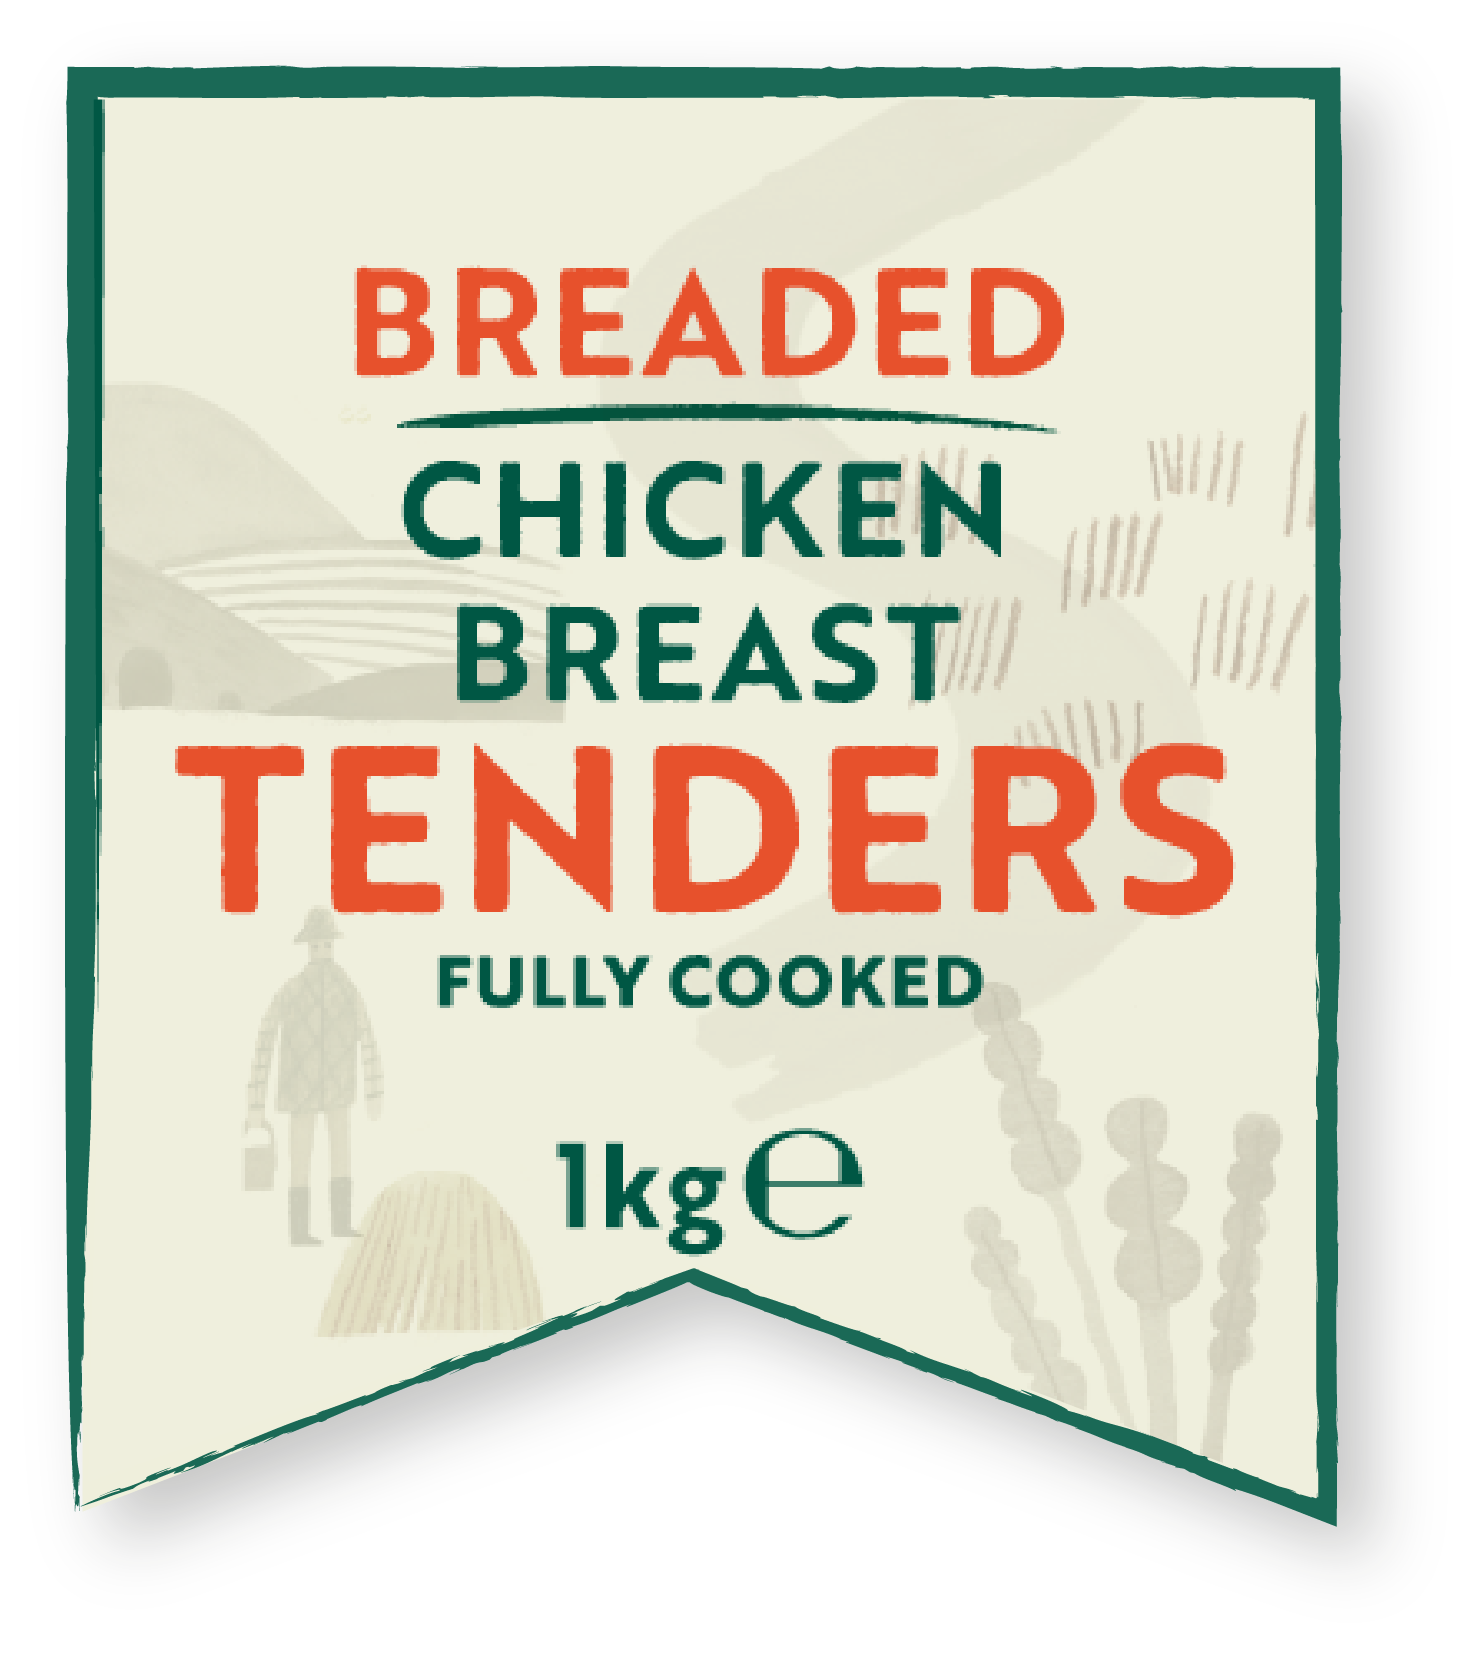 Breaded chicken breast tenders